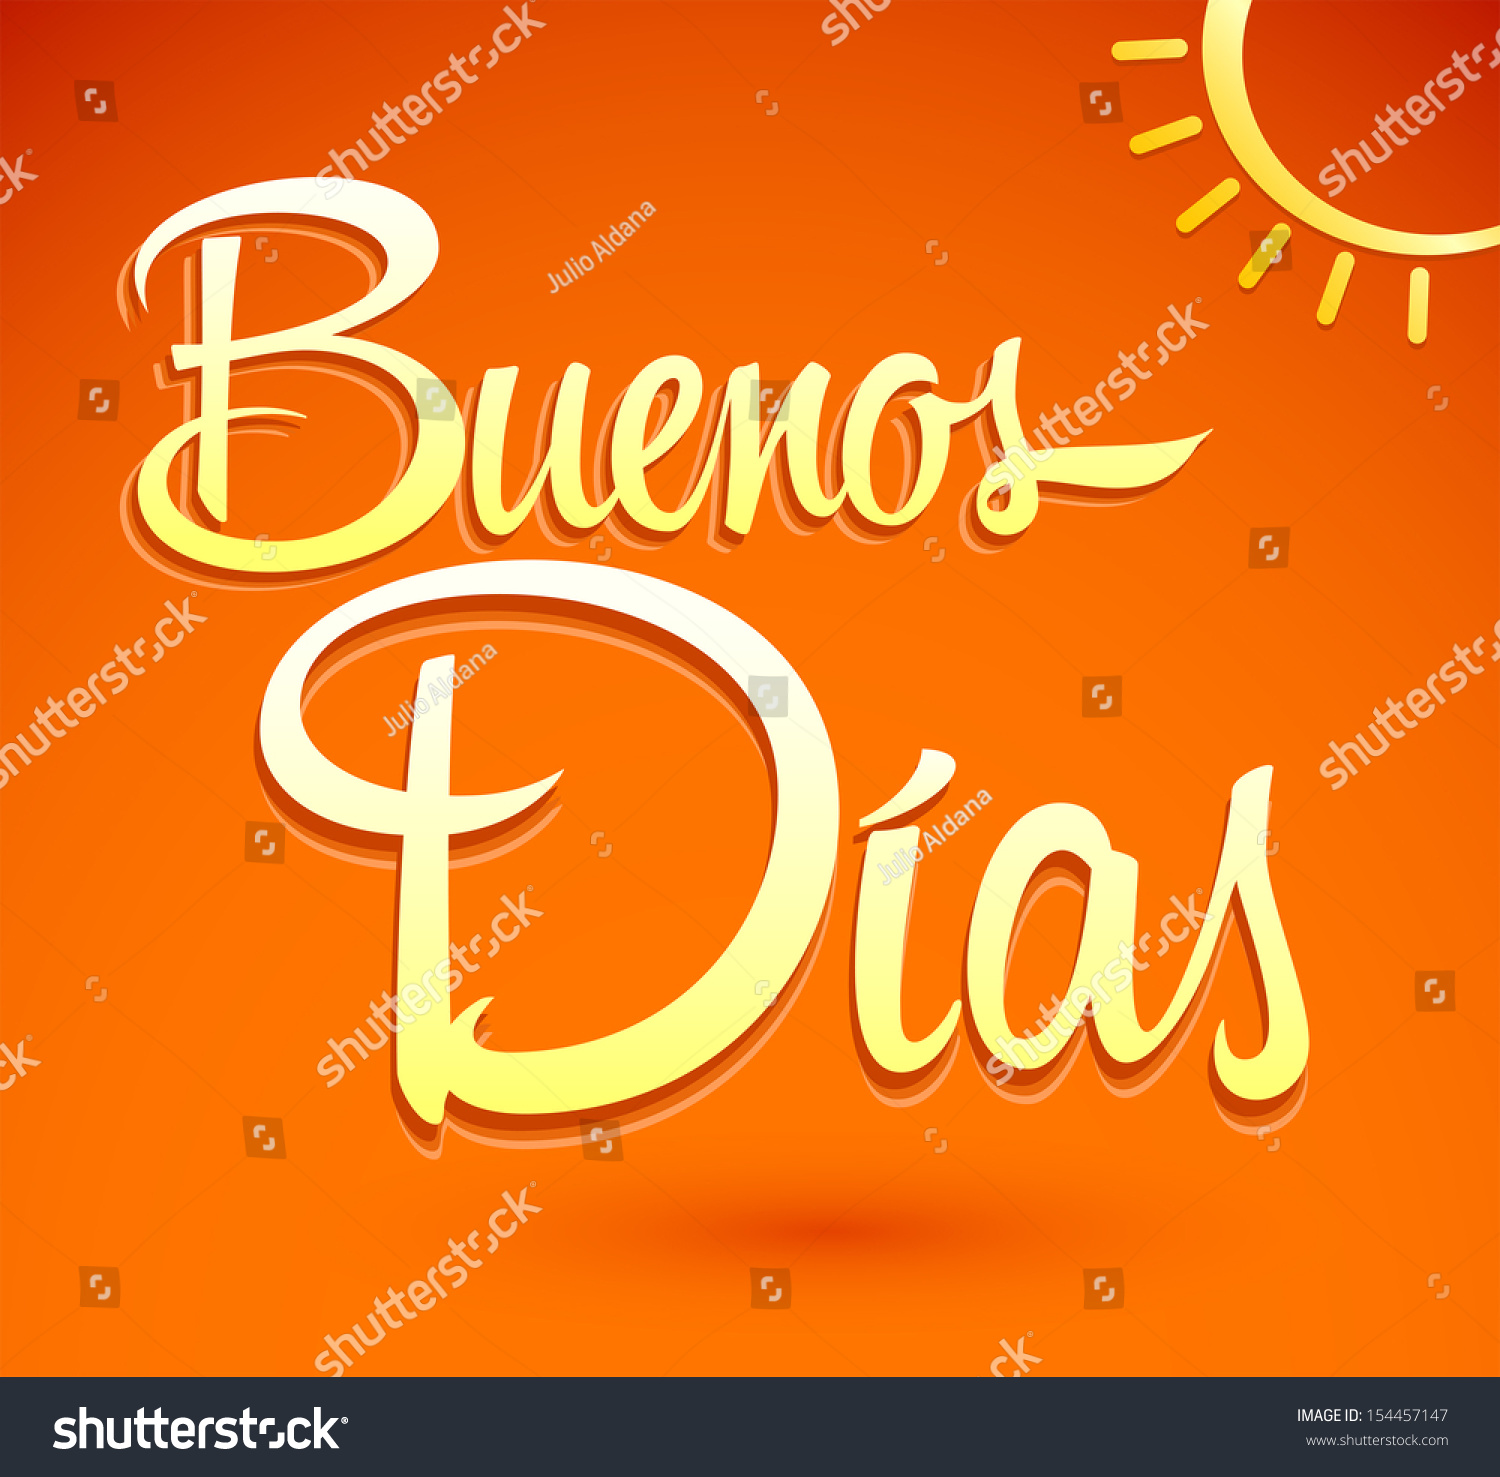 stock-vector-buenos-dias-good-morning-spanish-text-lettering-vector-